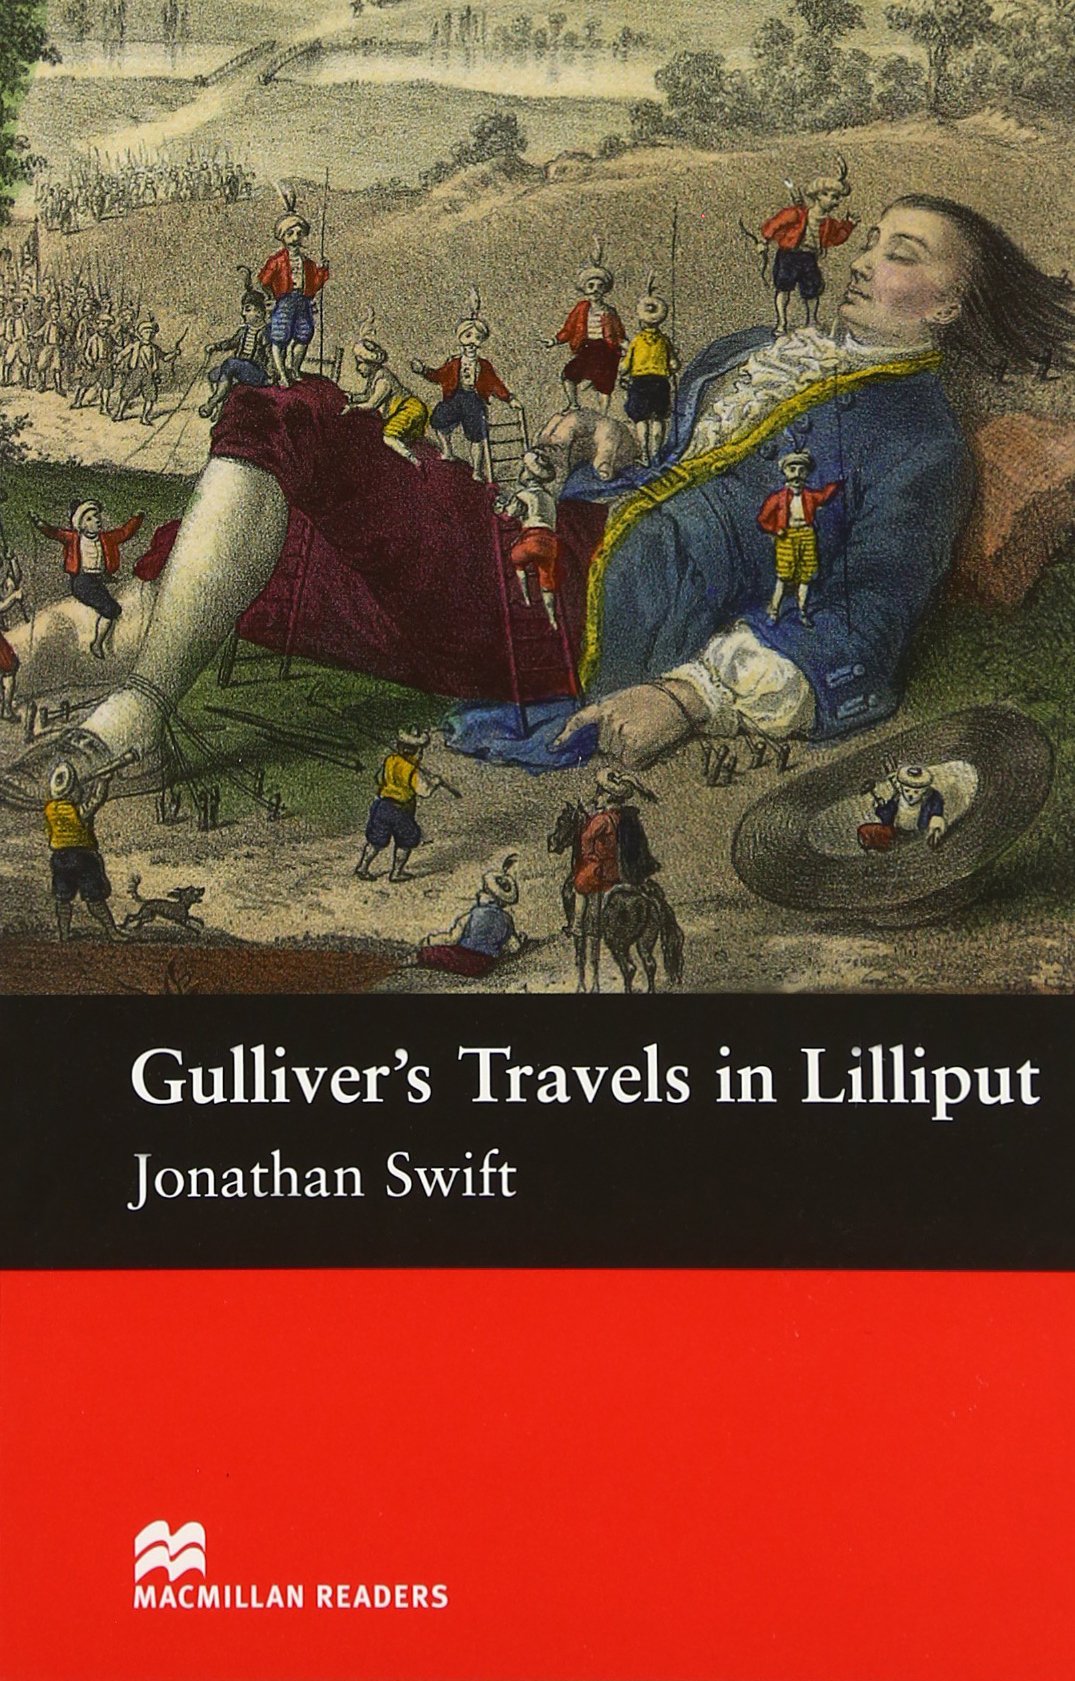 gulliver's travels a voyage to lilliput